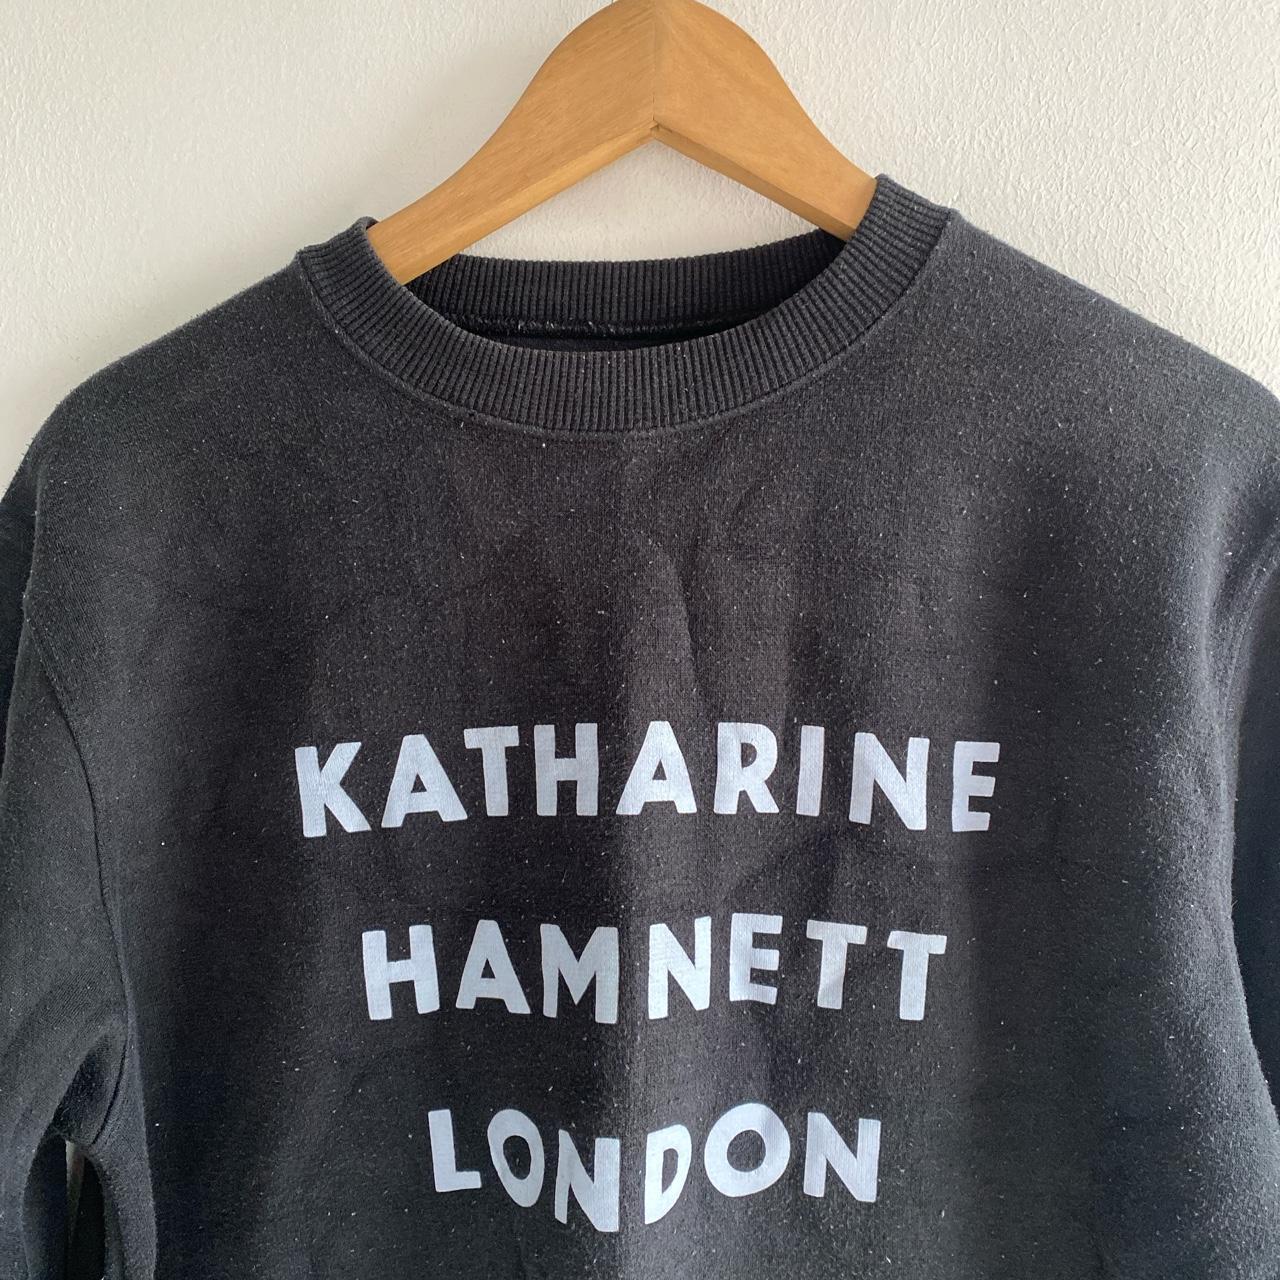 Katharine Hamnett London Sweatshirt, Pit 21”, Length